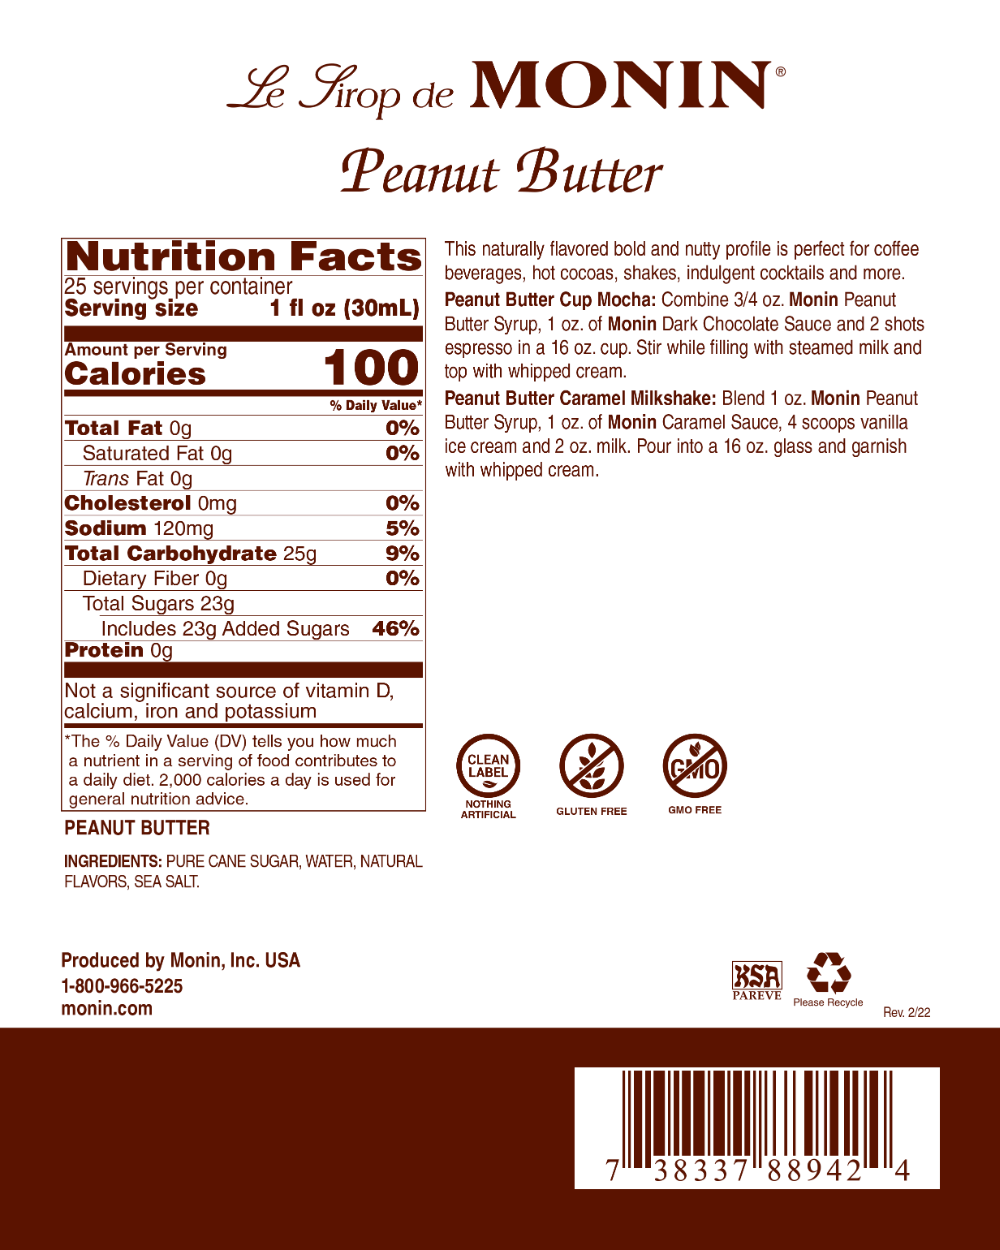 Peanut Butter - Monin 750ml Syrup